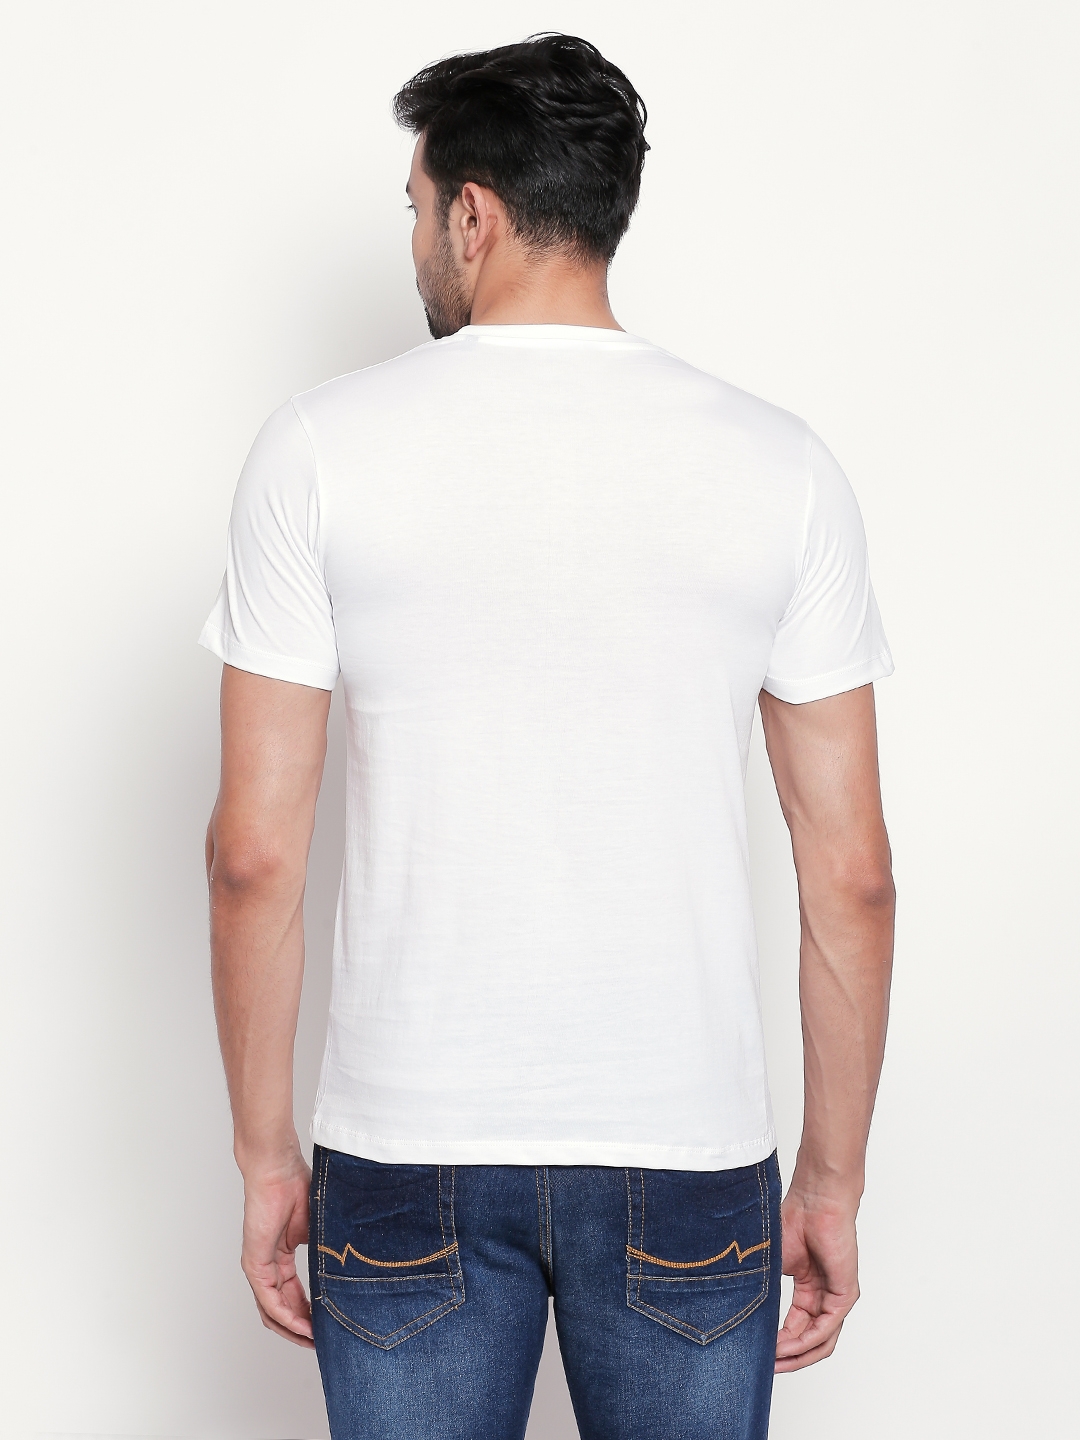 creativeideas.store | Asterisk White Tshirt 1